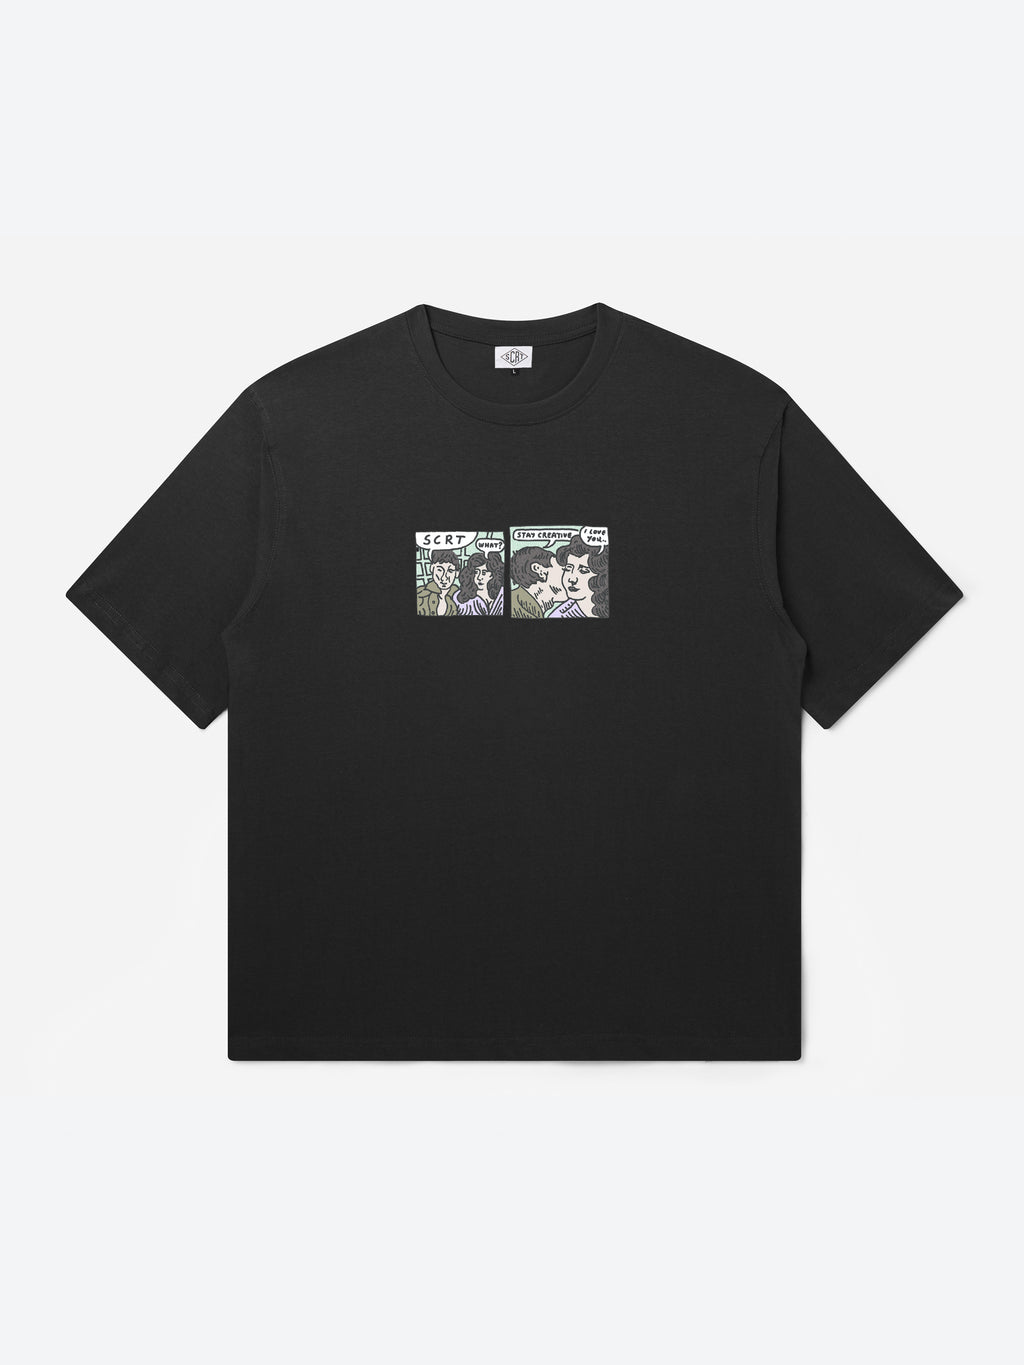 Lovers T-Shirt - Black